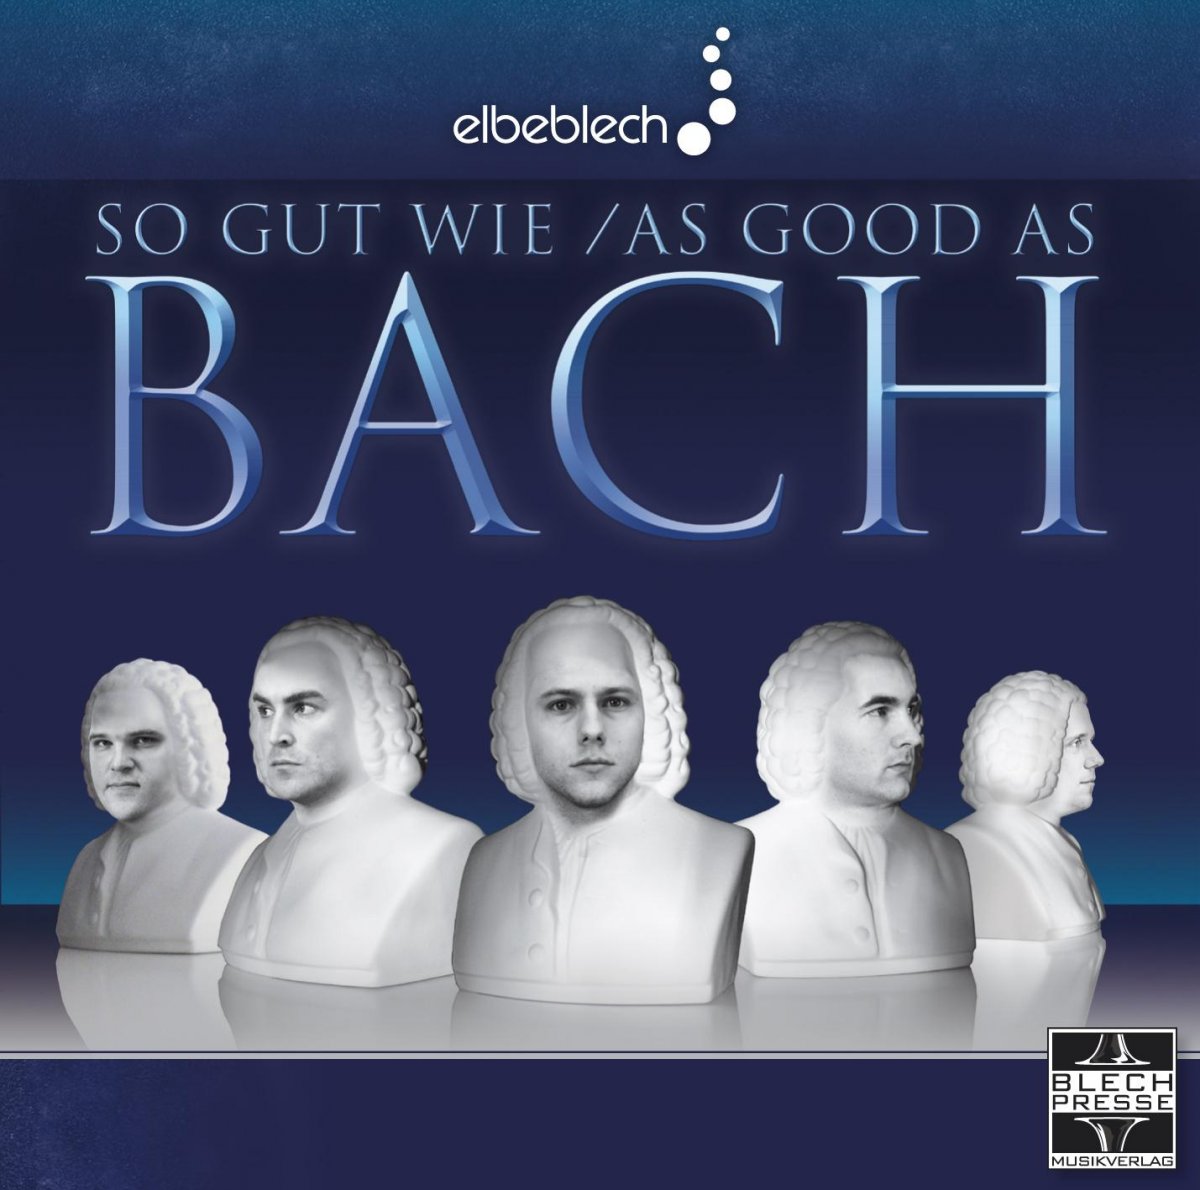 So gut wie Bach / As good as Bach - hacer clic aqu